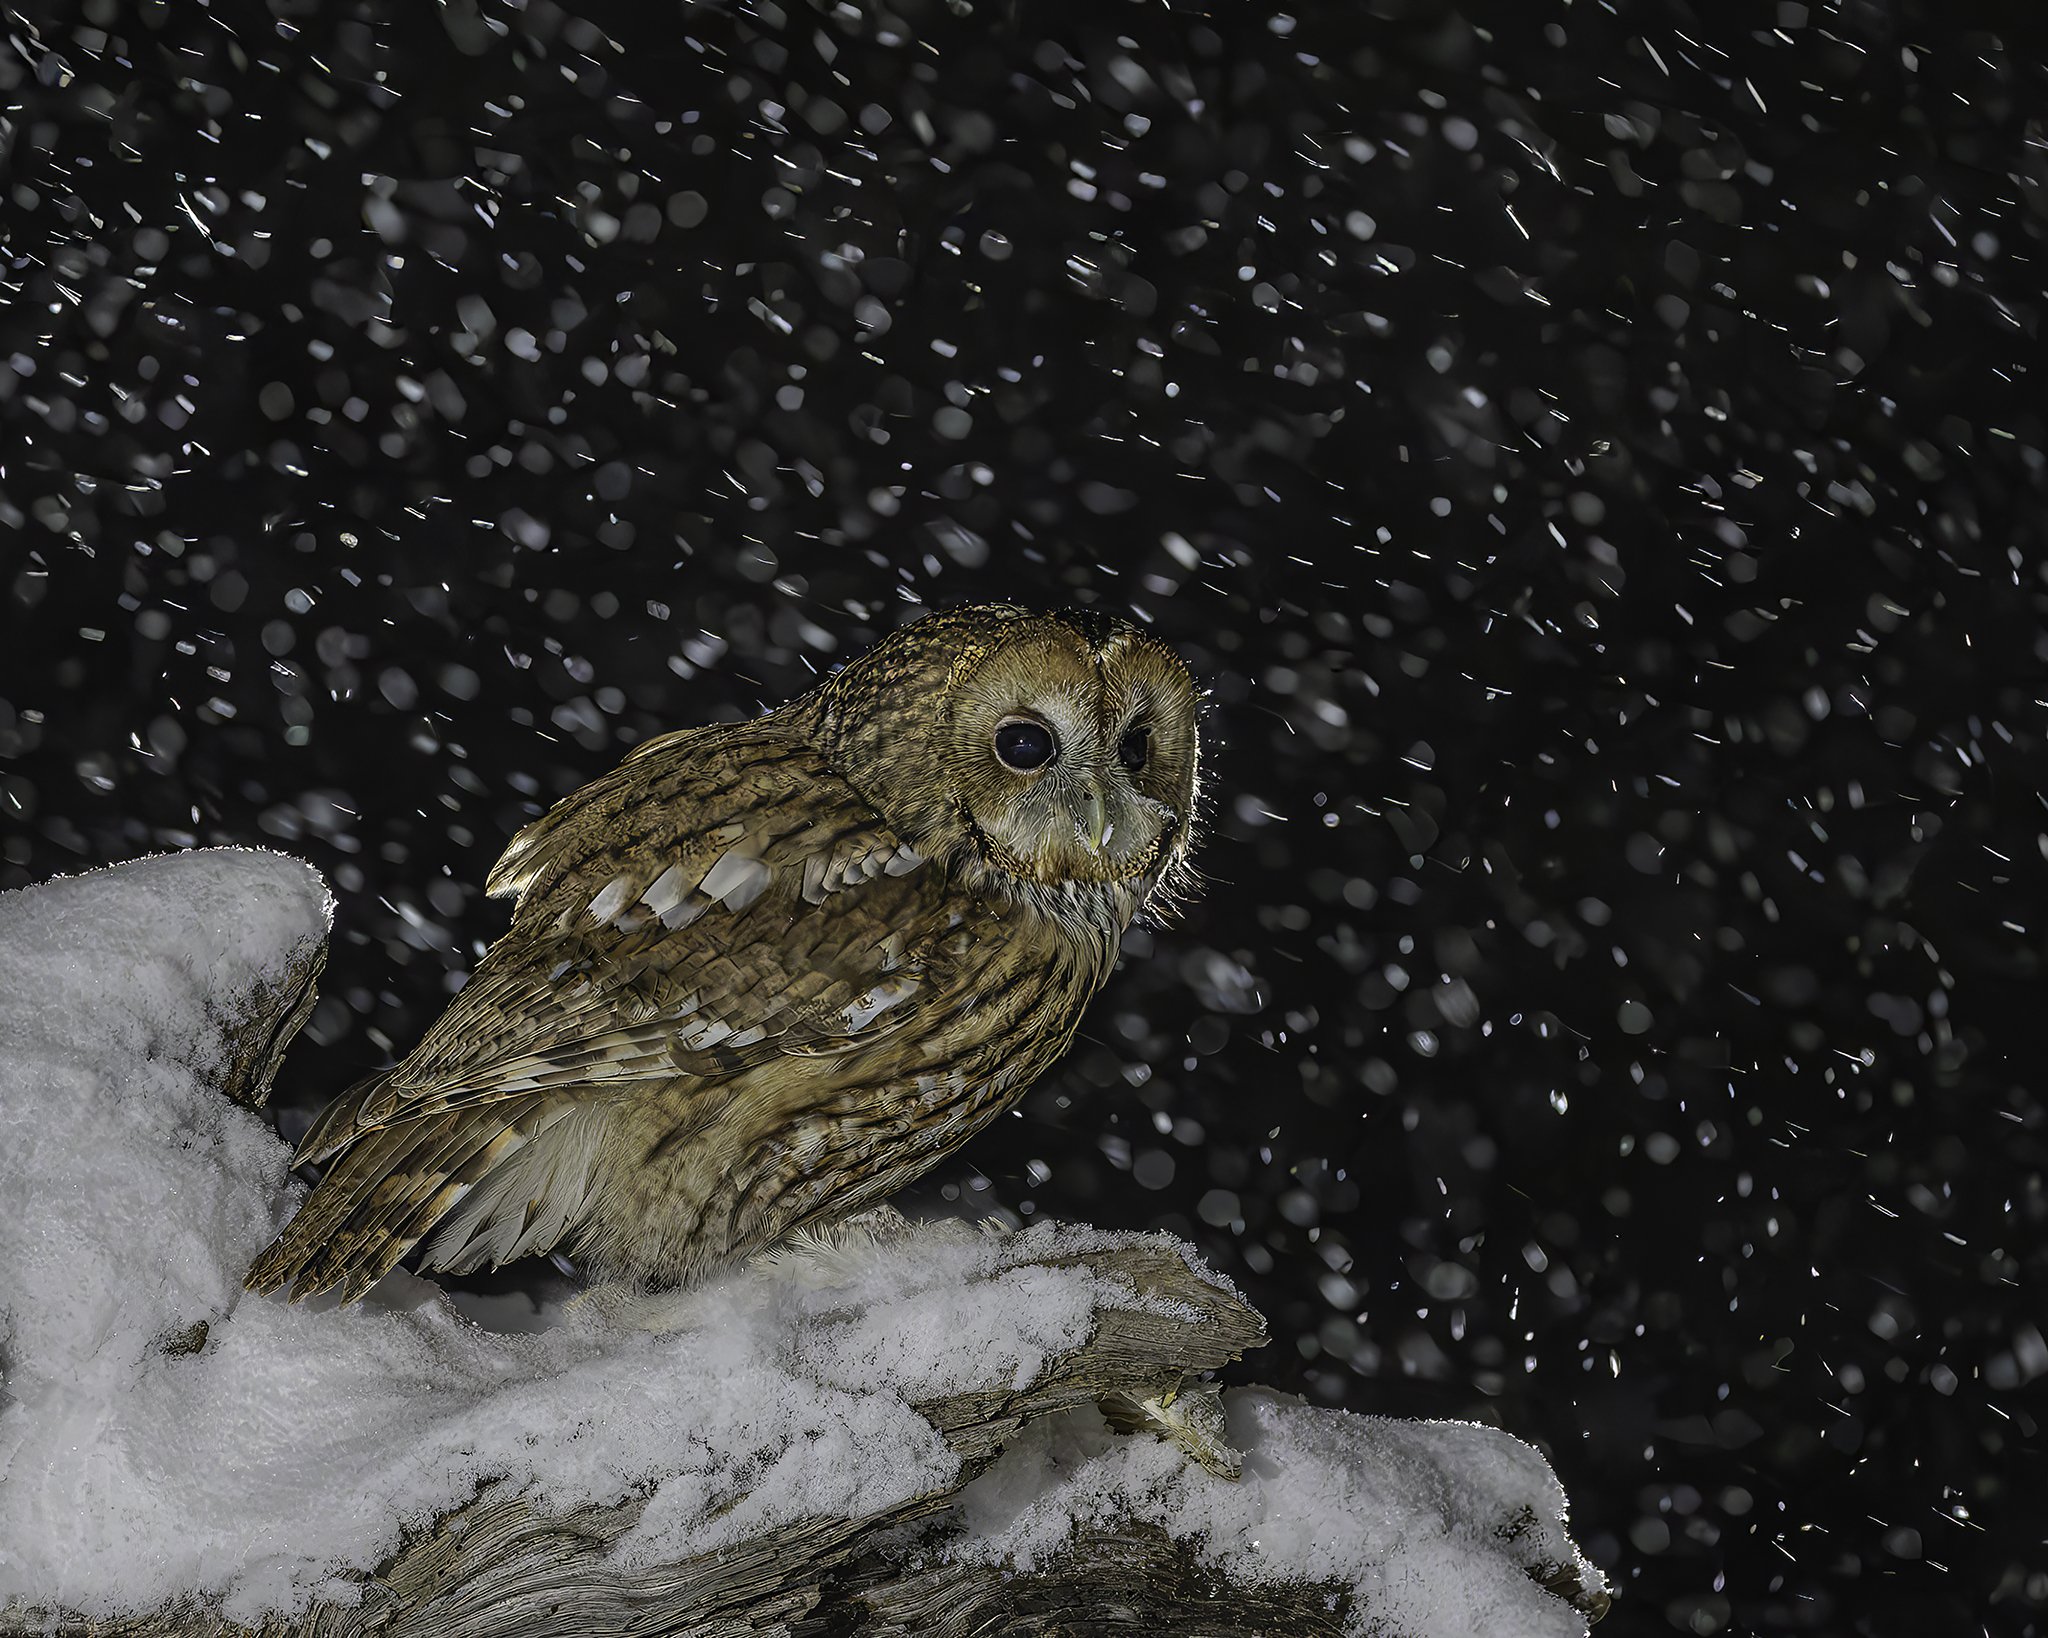 Tawny owl in winter wonderland 2